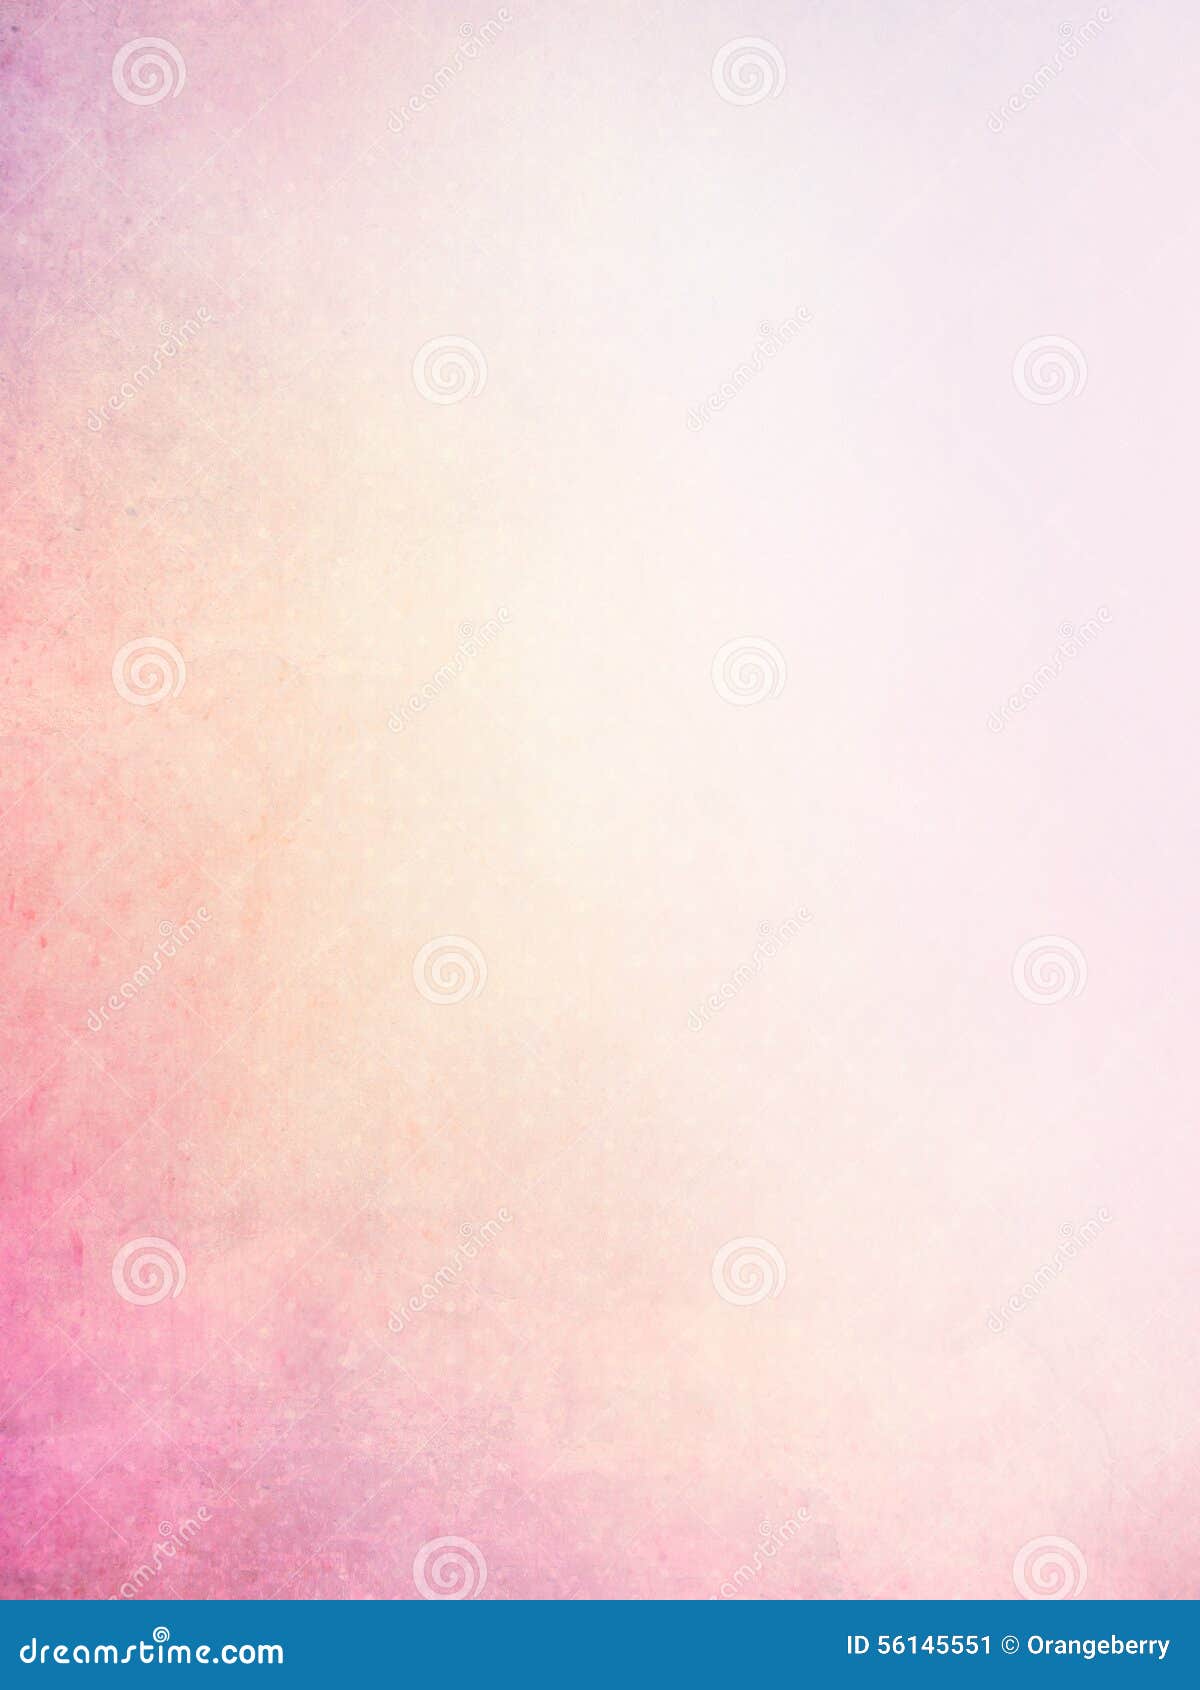 Pastel soft background stock illustration. Illustration of girl - 56145551